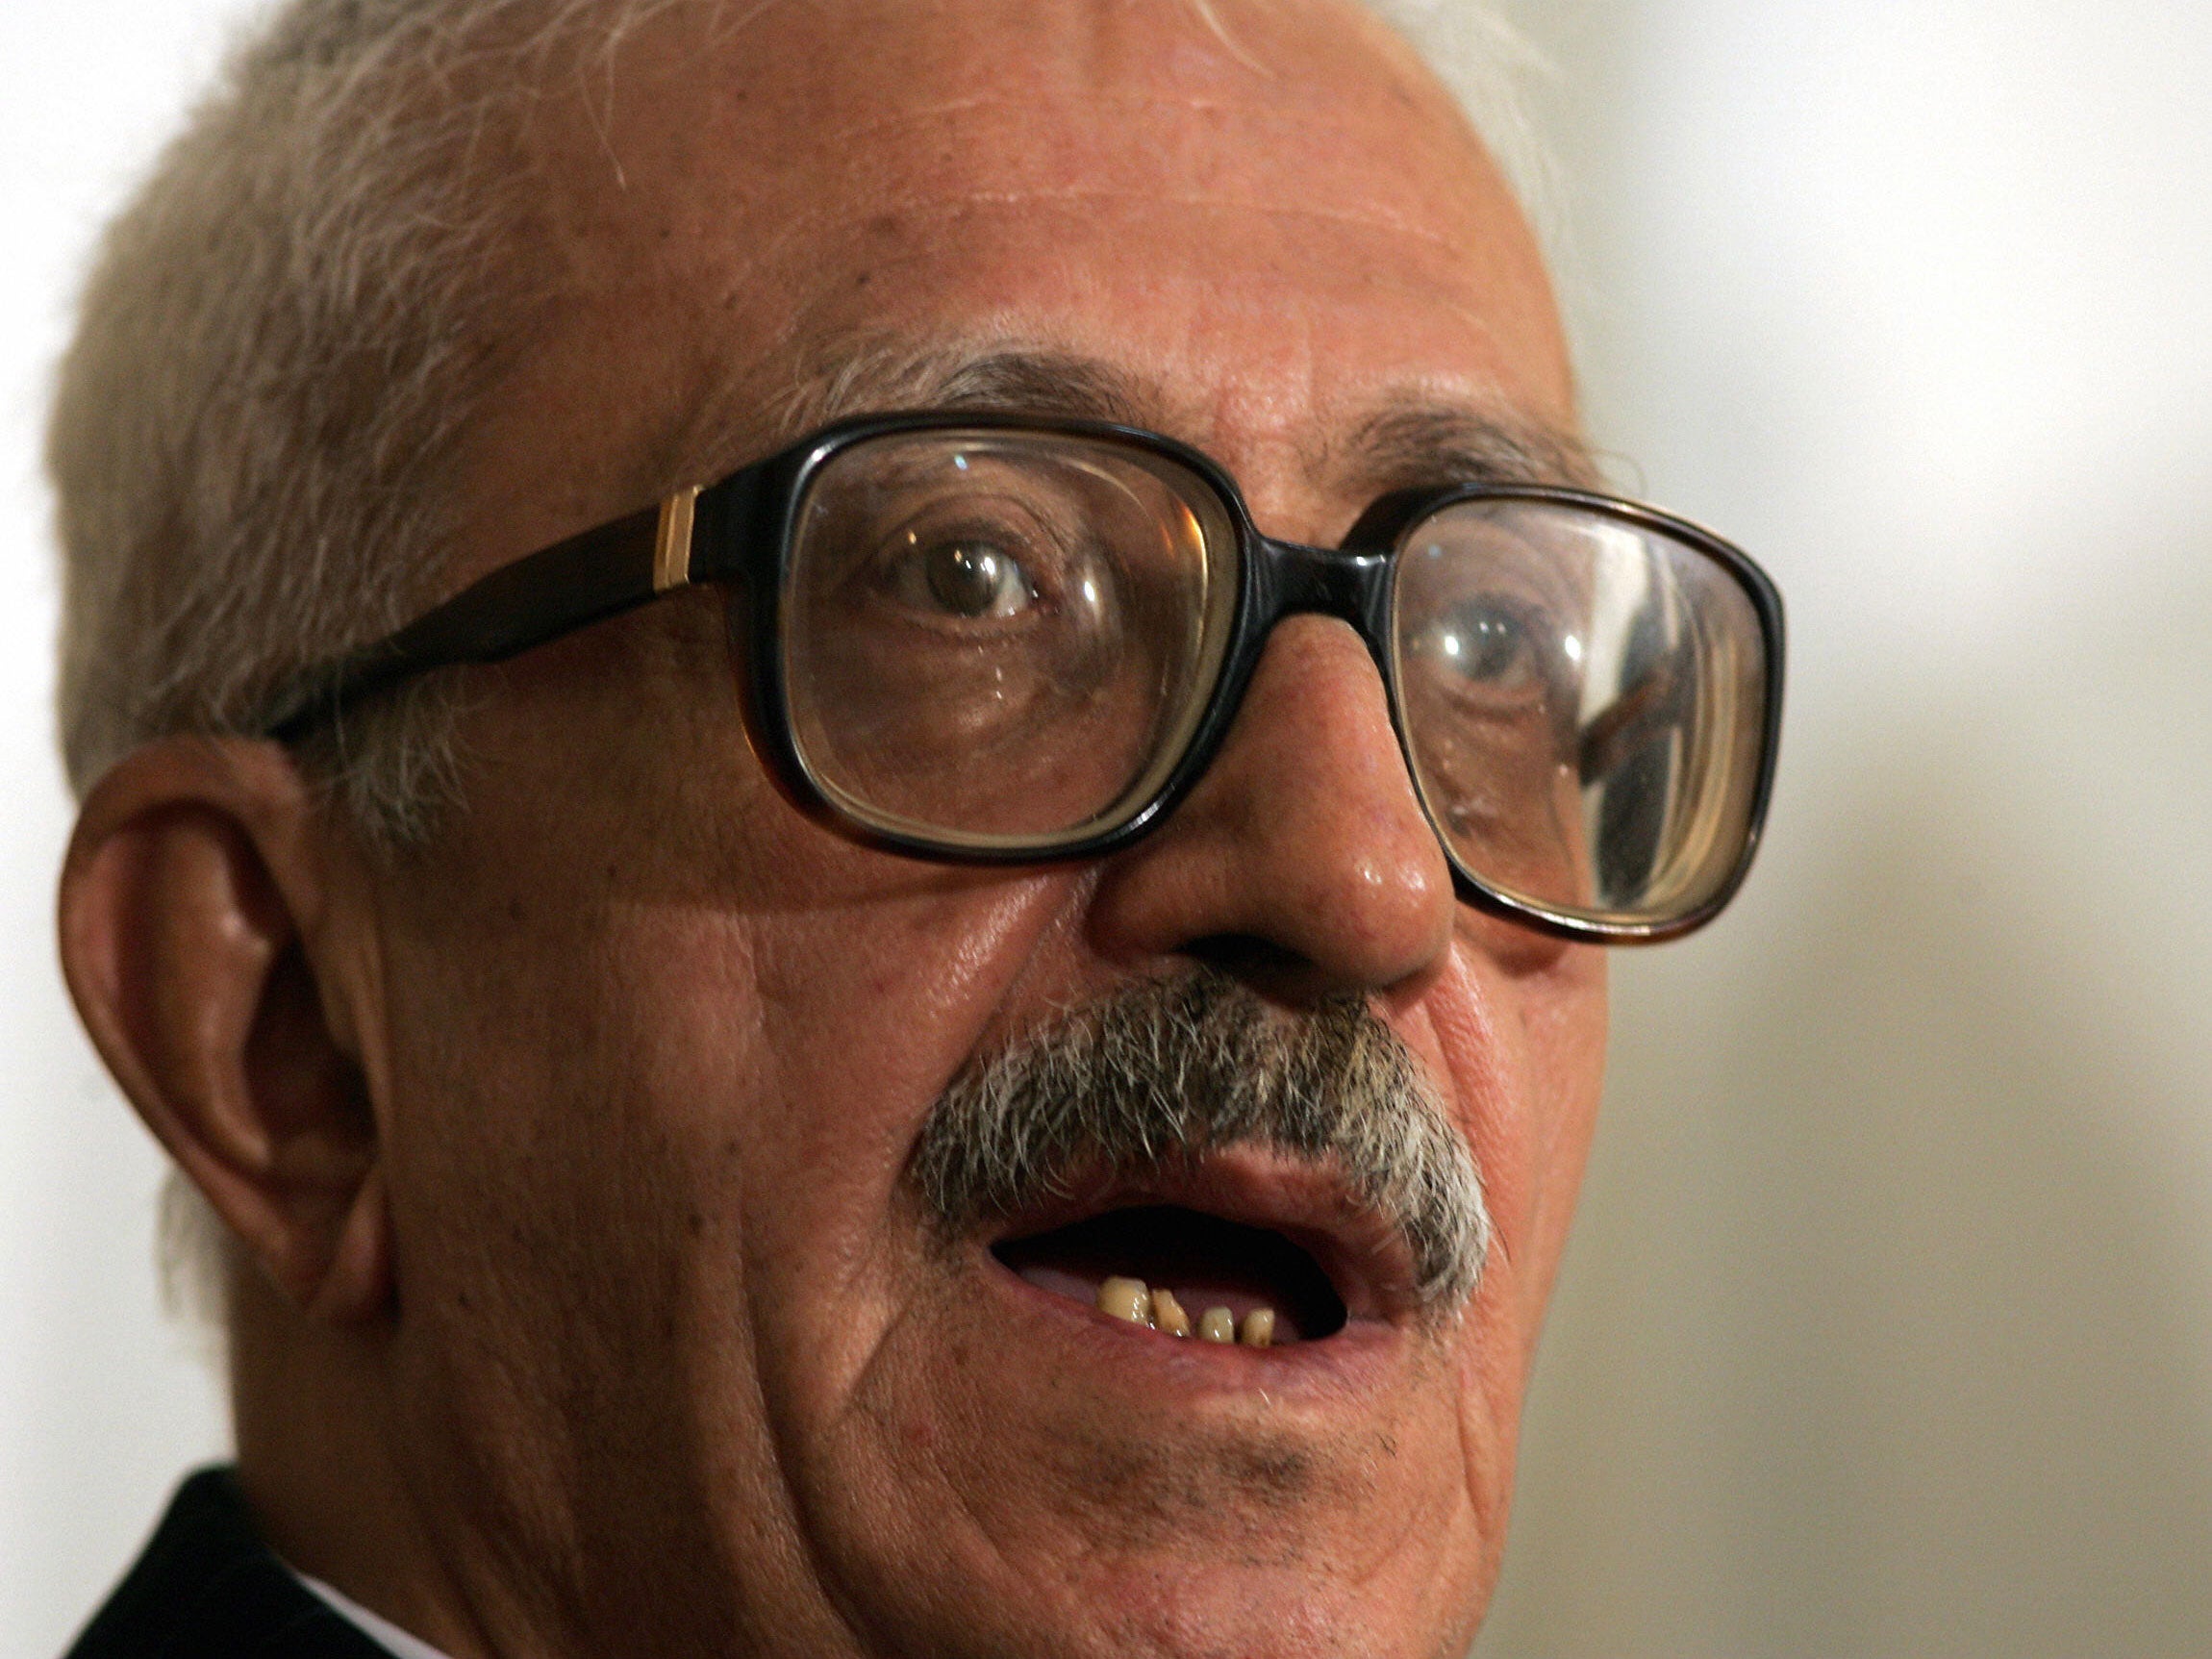 Tariq Aziz also served as the Iraqi deputy prime minister during the Saddam Hussein regime